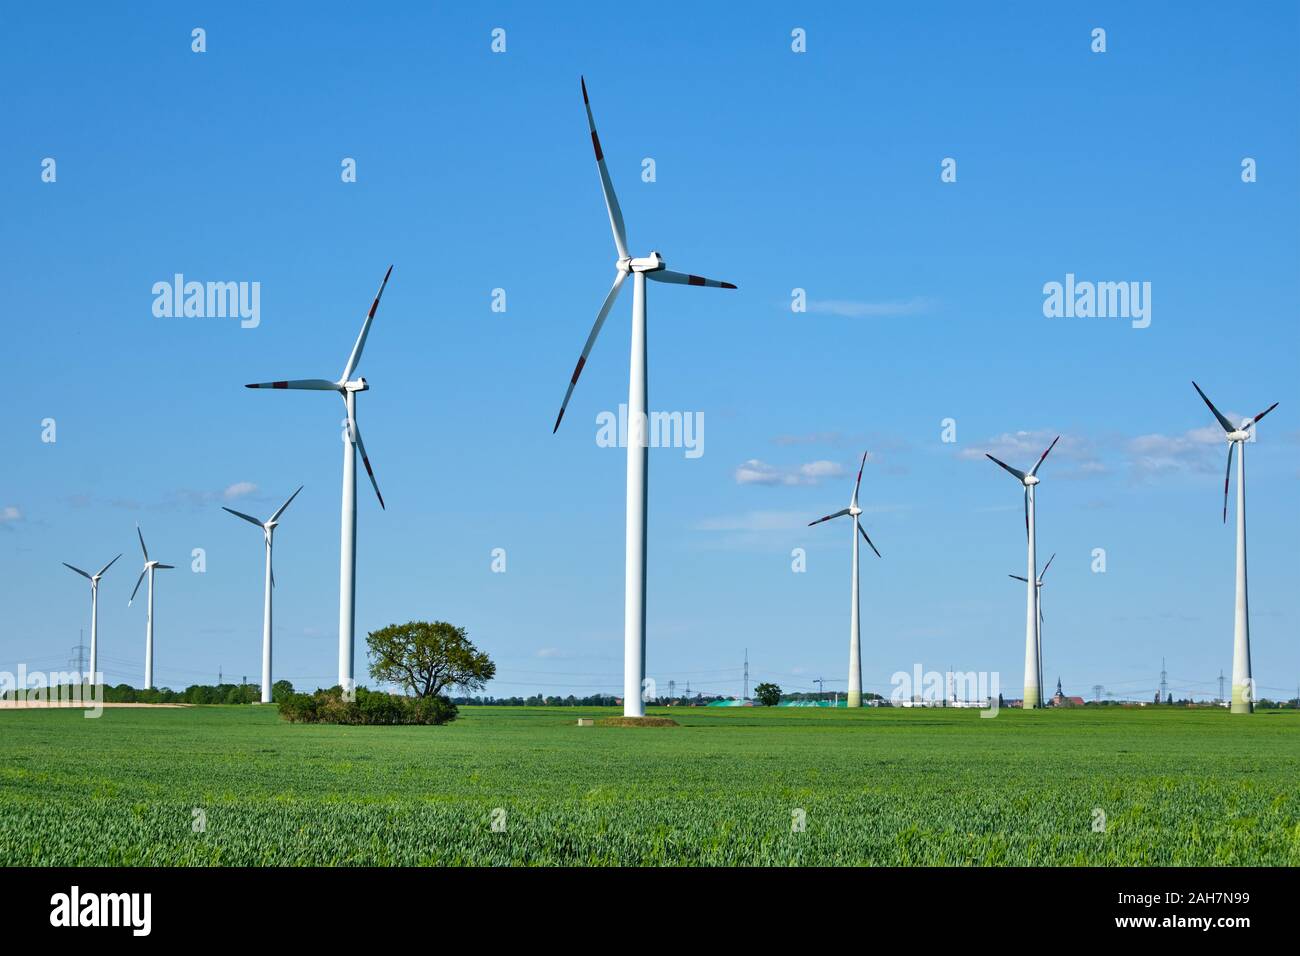 Modern wind energy turbines in a cornfield seen in Germany Stock Photo